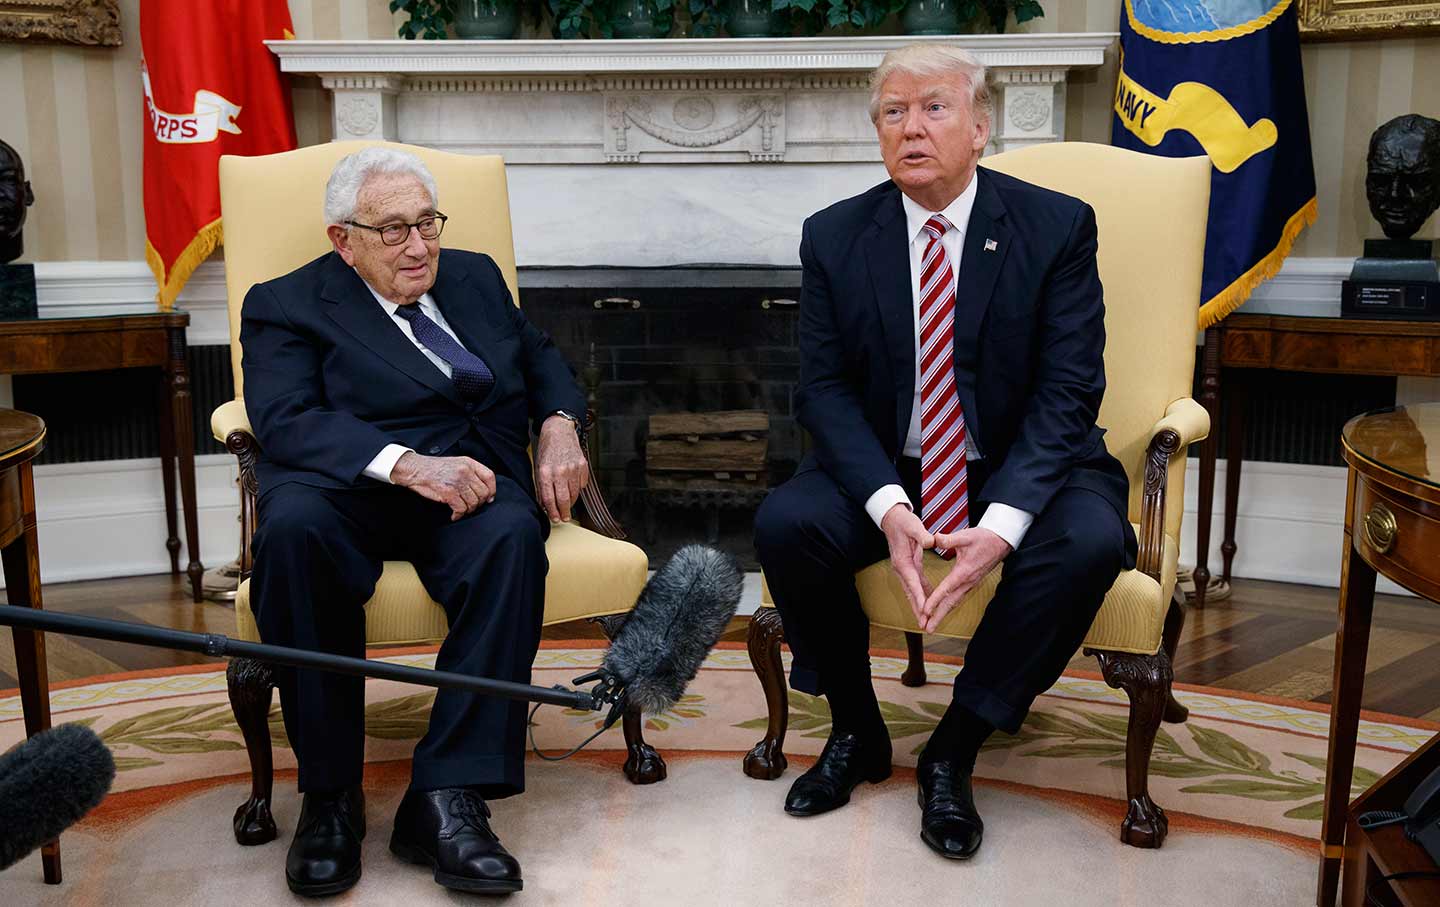 Trump and Kissinger